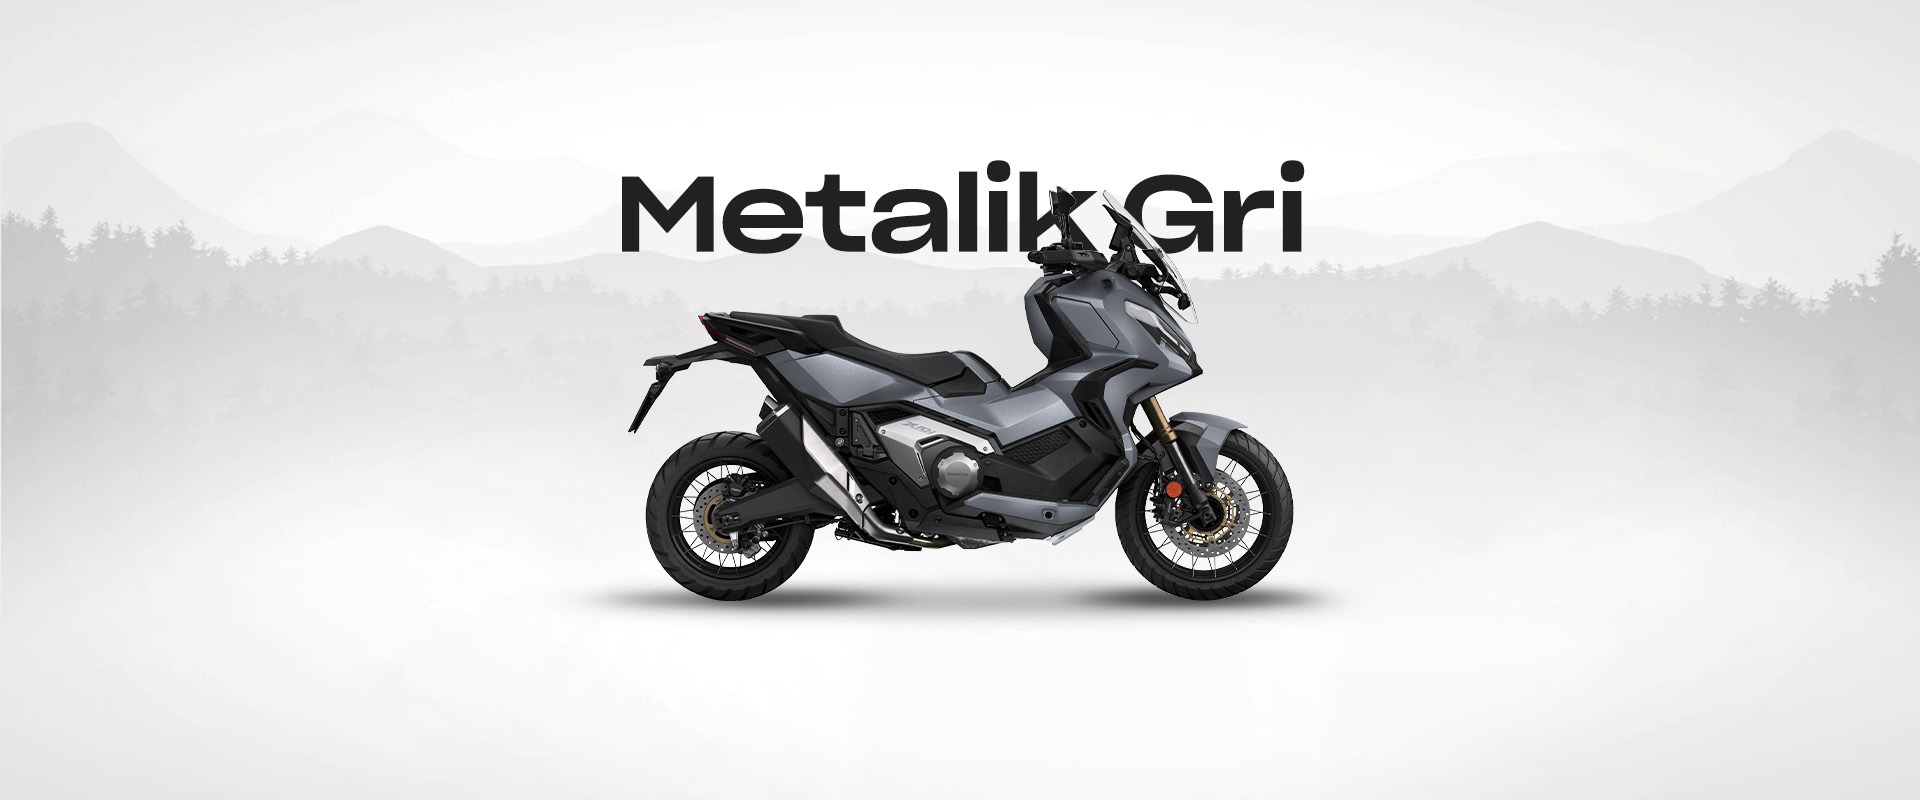  GÜNGÖR MOTOR Metalik Gri <br /> Mat Iridium Gray Metallic <br /> (NHC64)